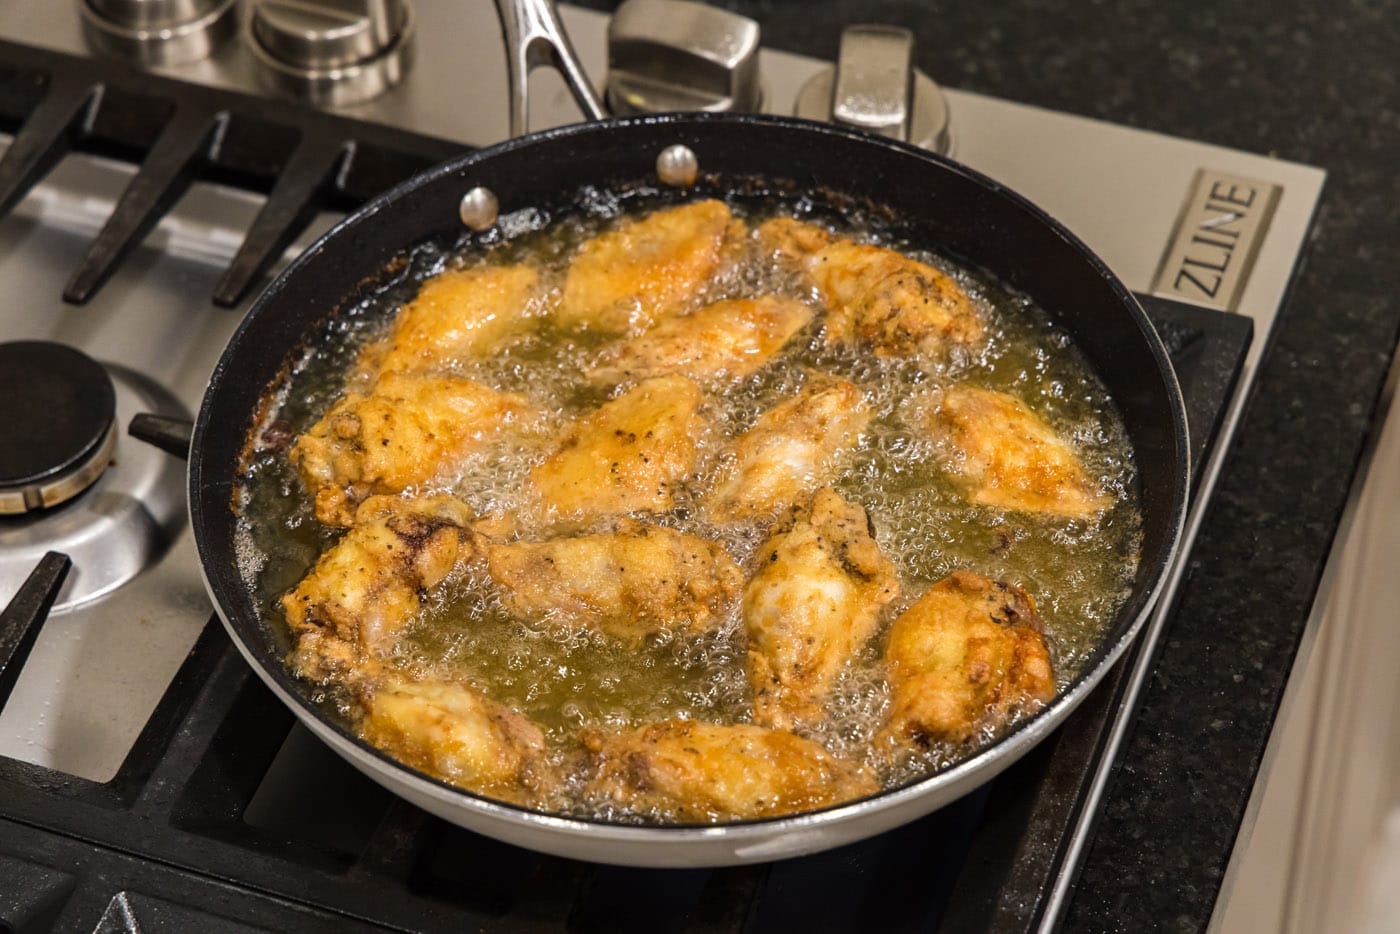 fried chicken wings in a skillet of oil